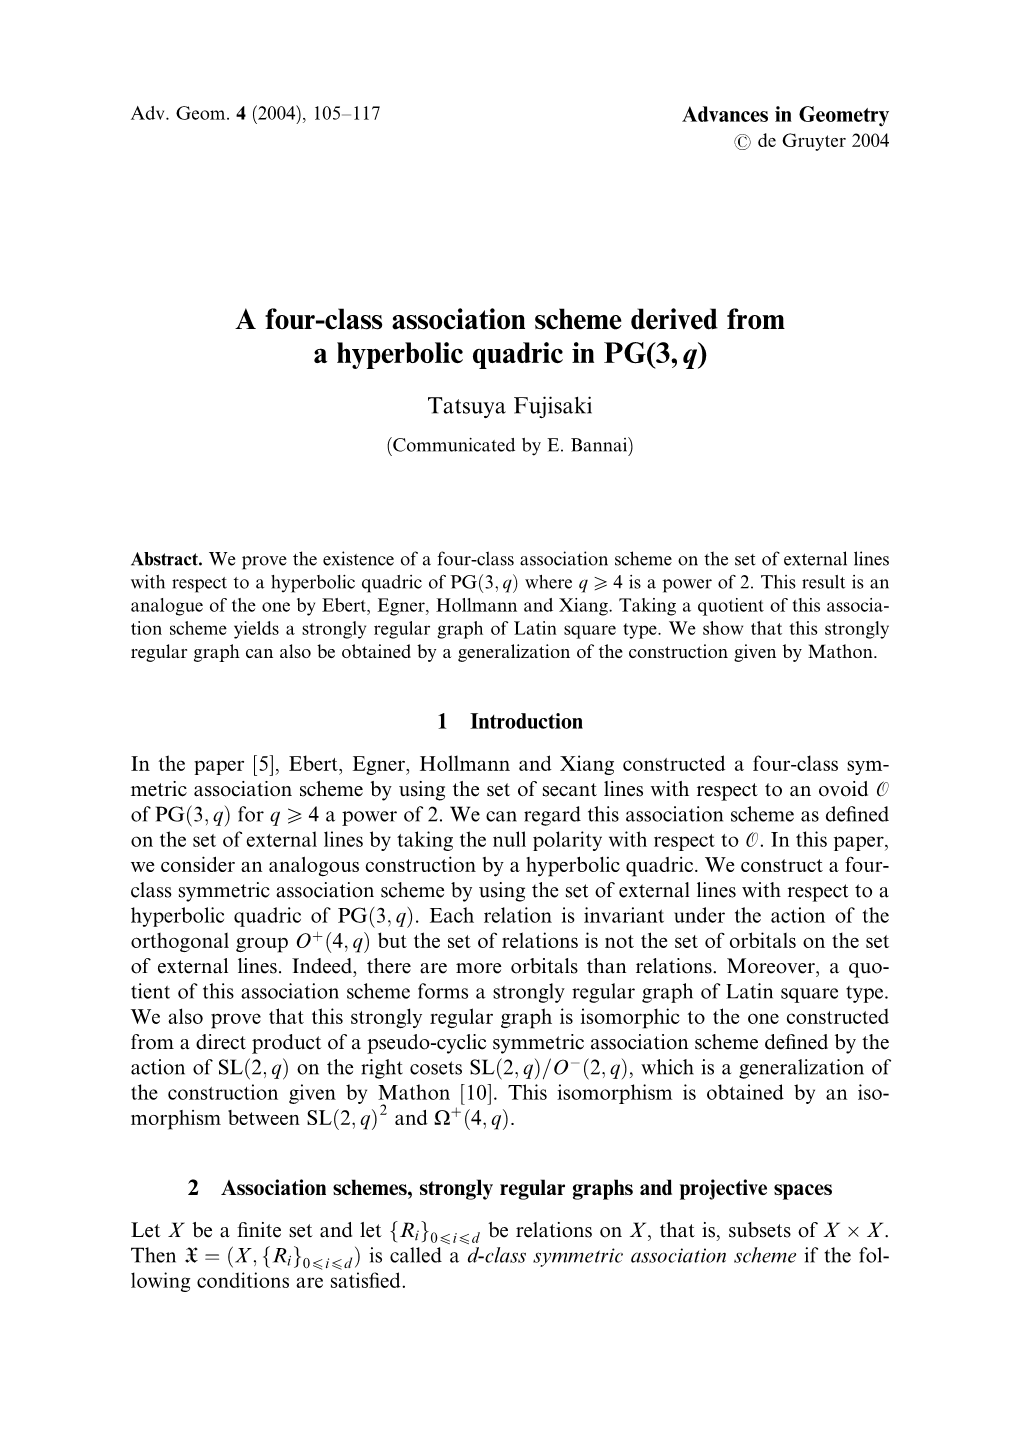 A Four-Class Association Scheme Derived from a Hyperbolic Quadric in PG(3, Q)